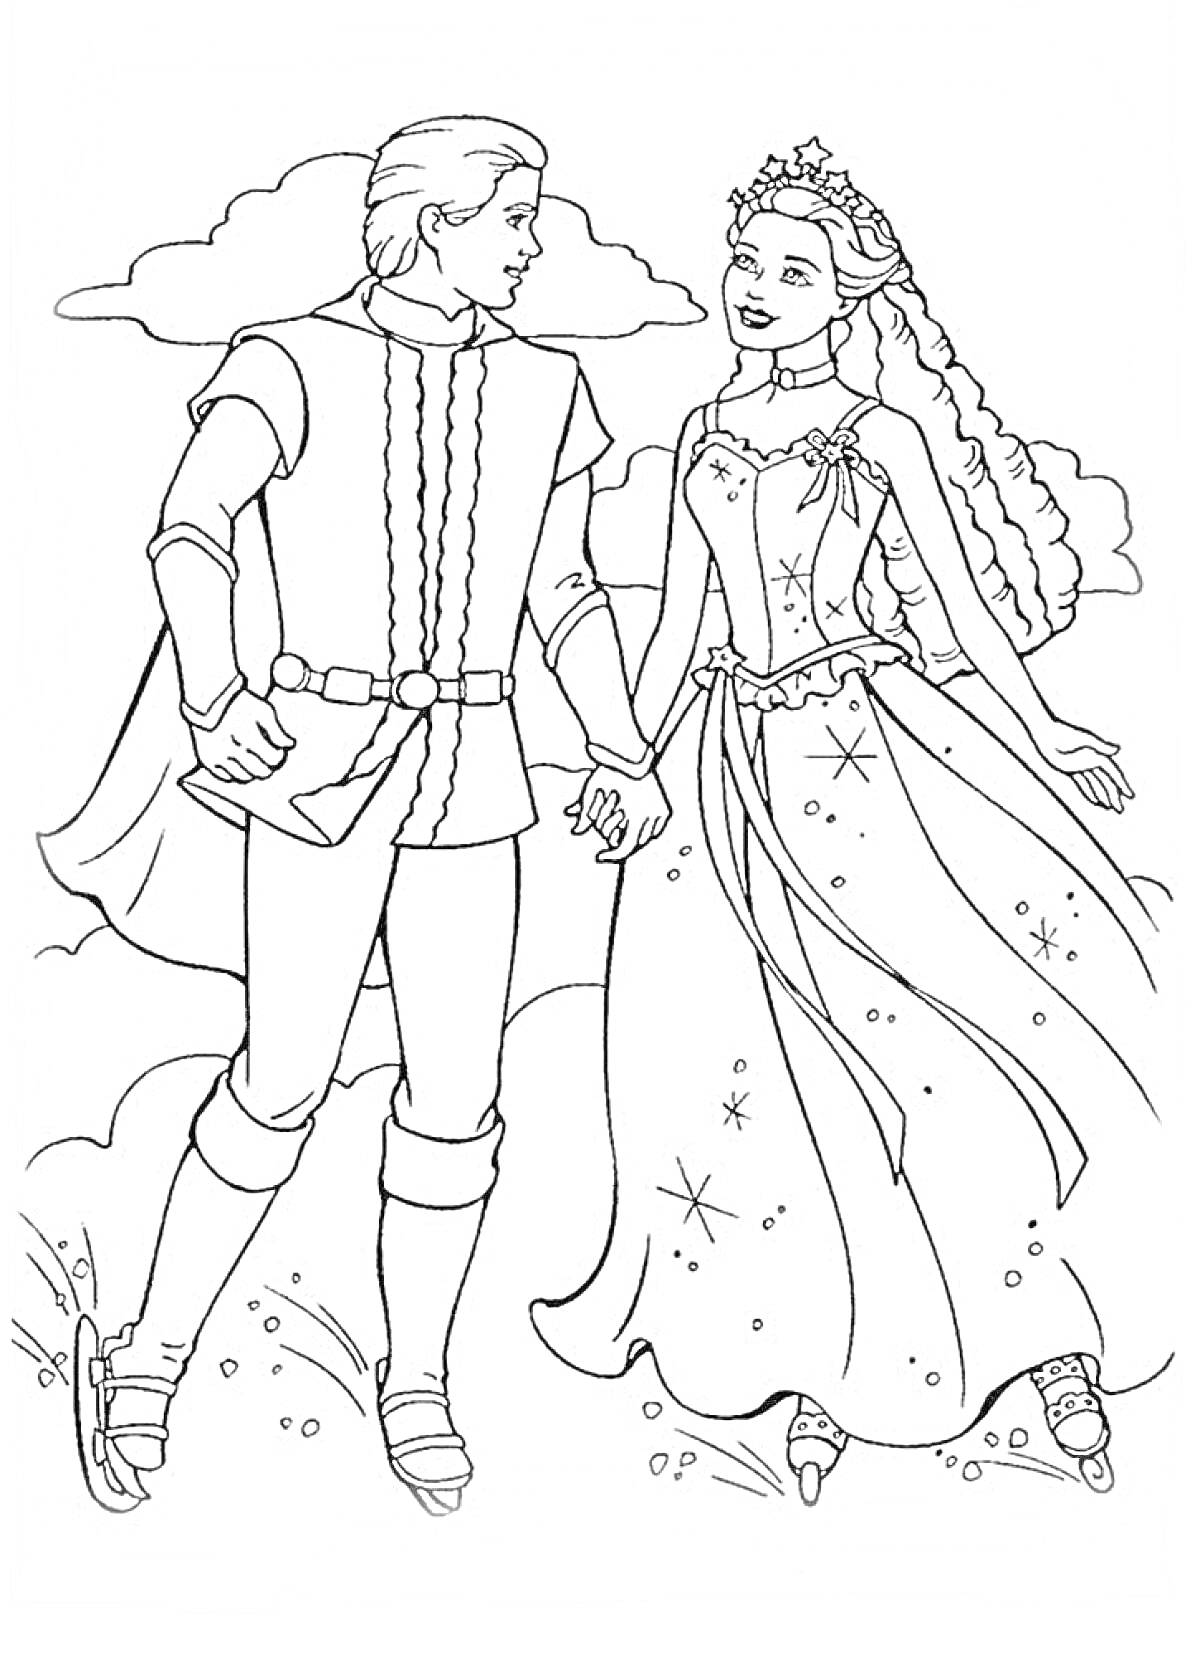 Раскраска Барби и Кен в романтическом наряде на фоне облаков